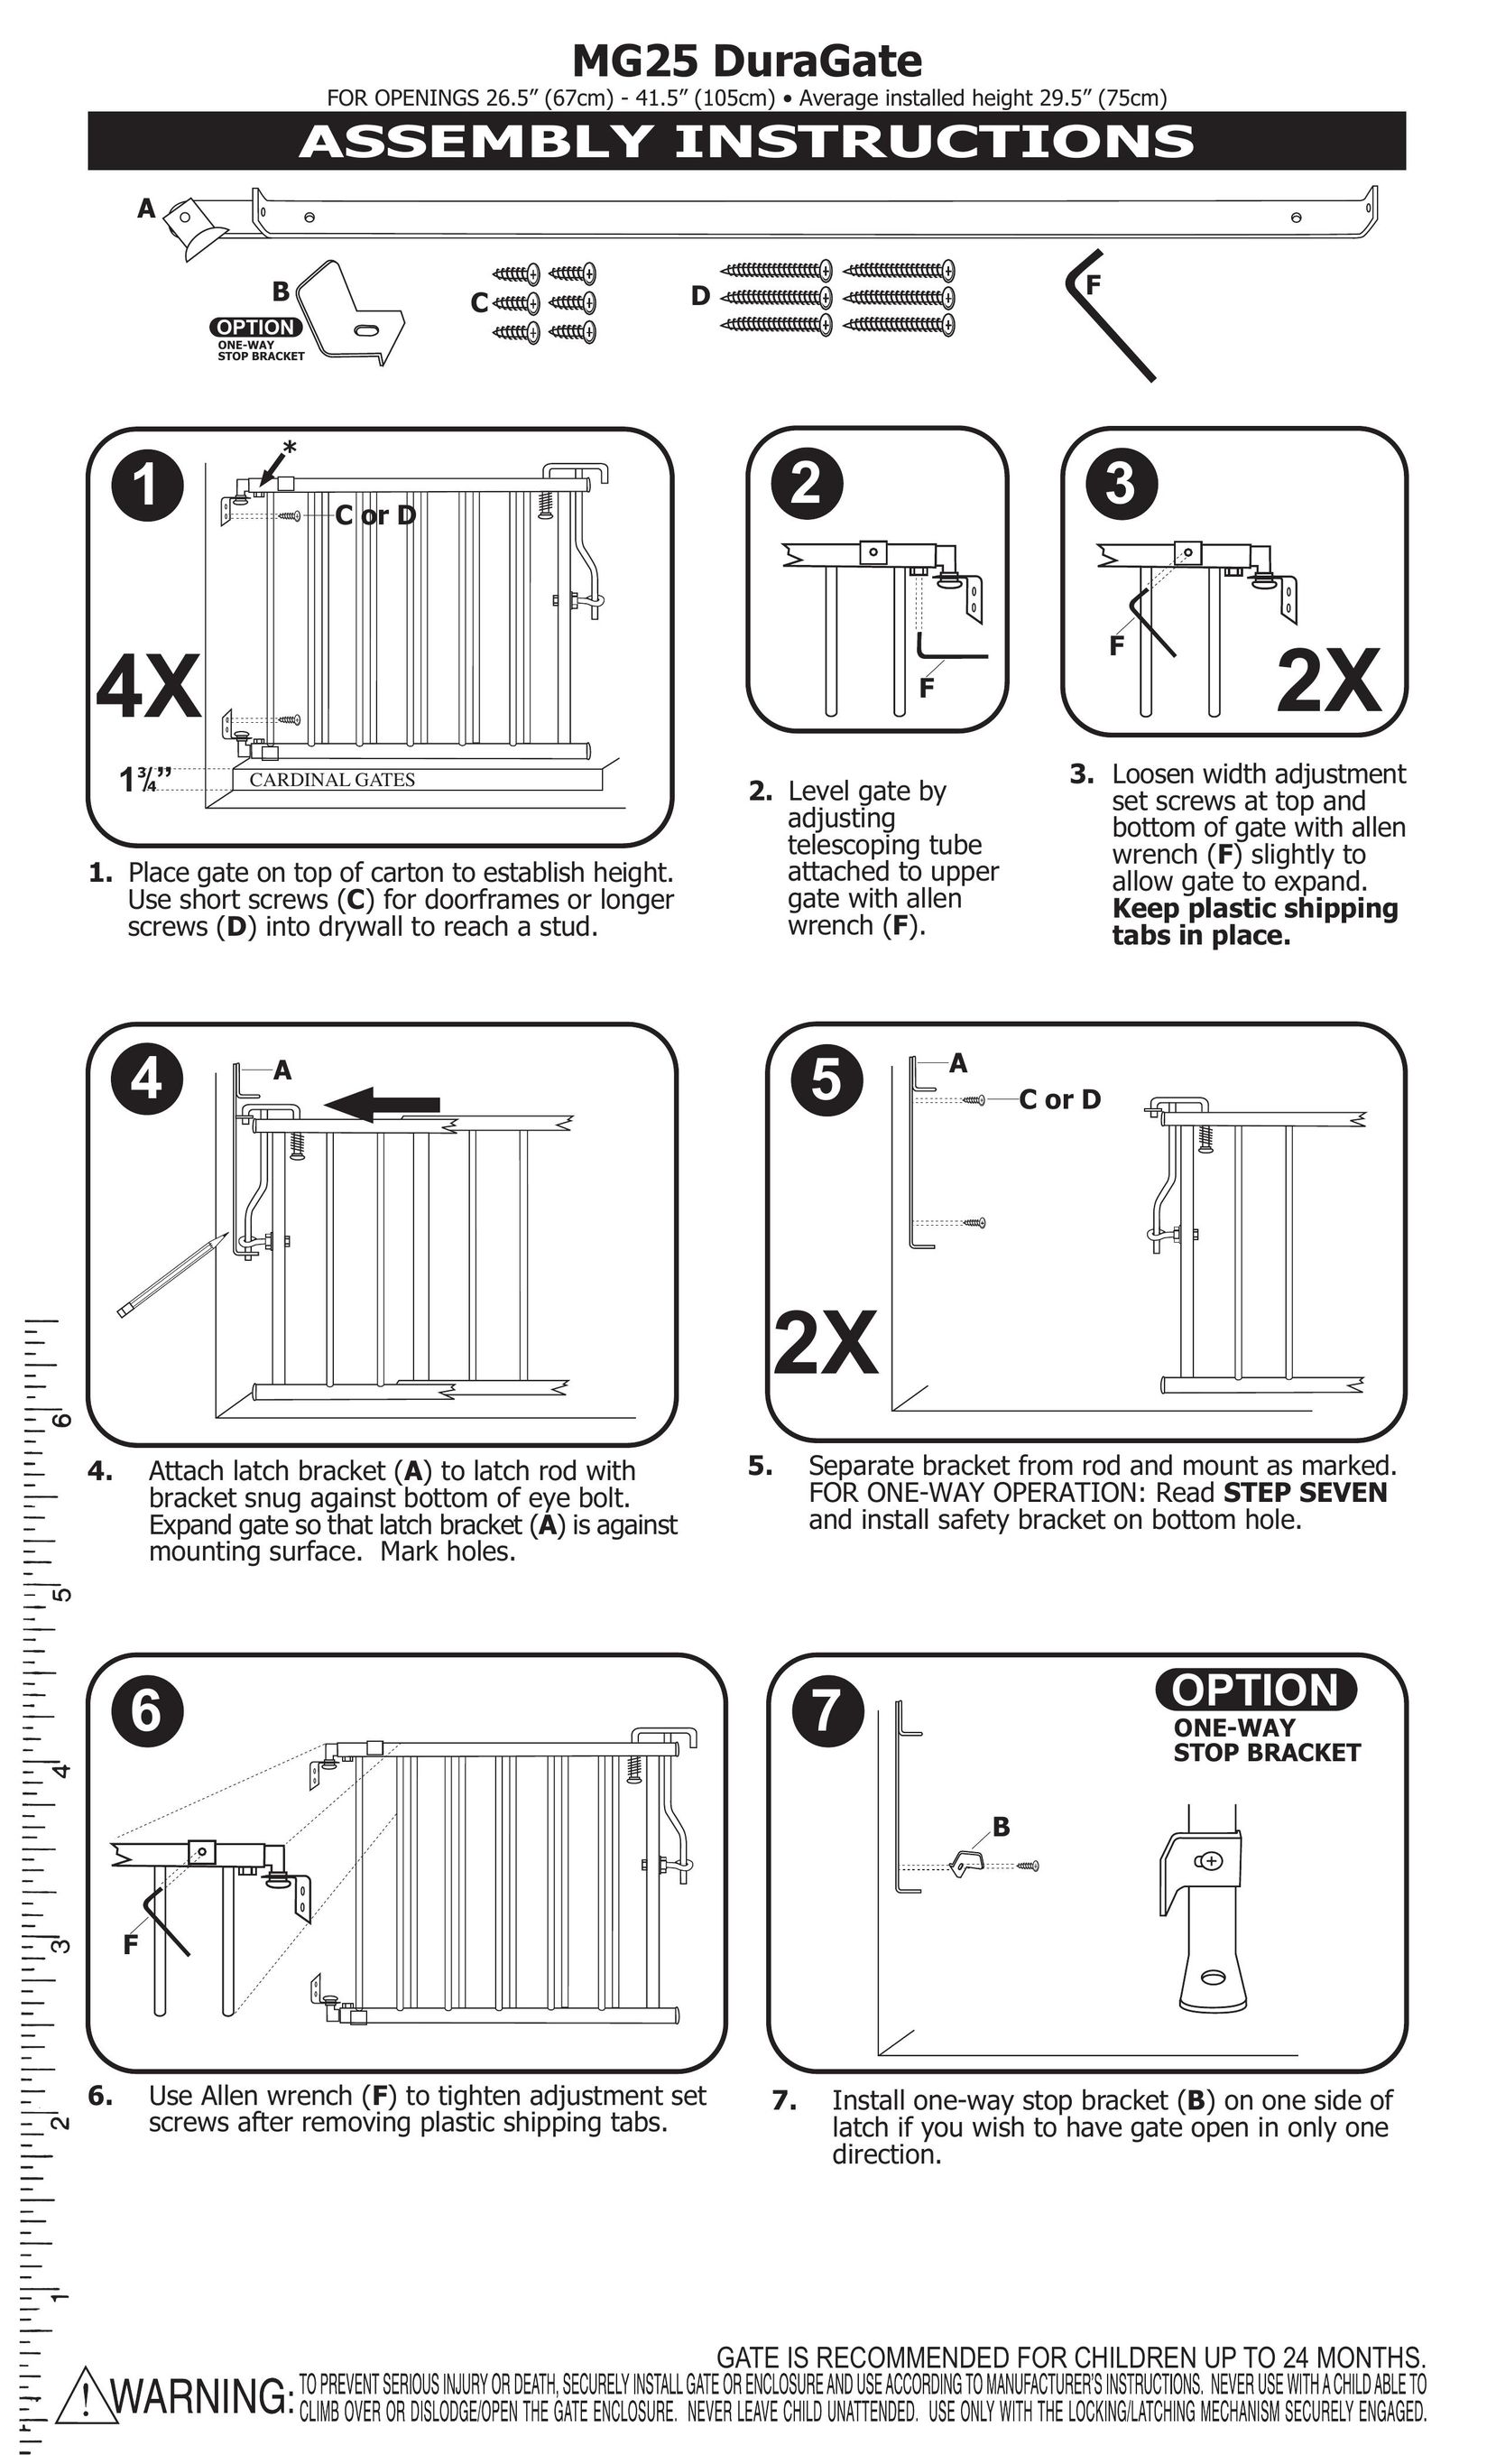 Cardinal Gates MG25 Safety Gate User Manual